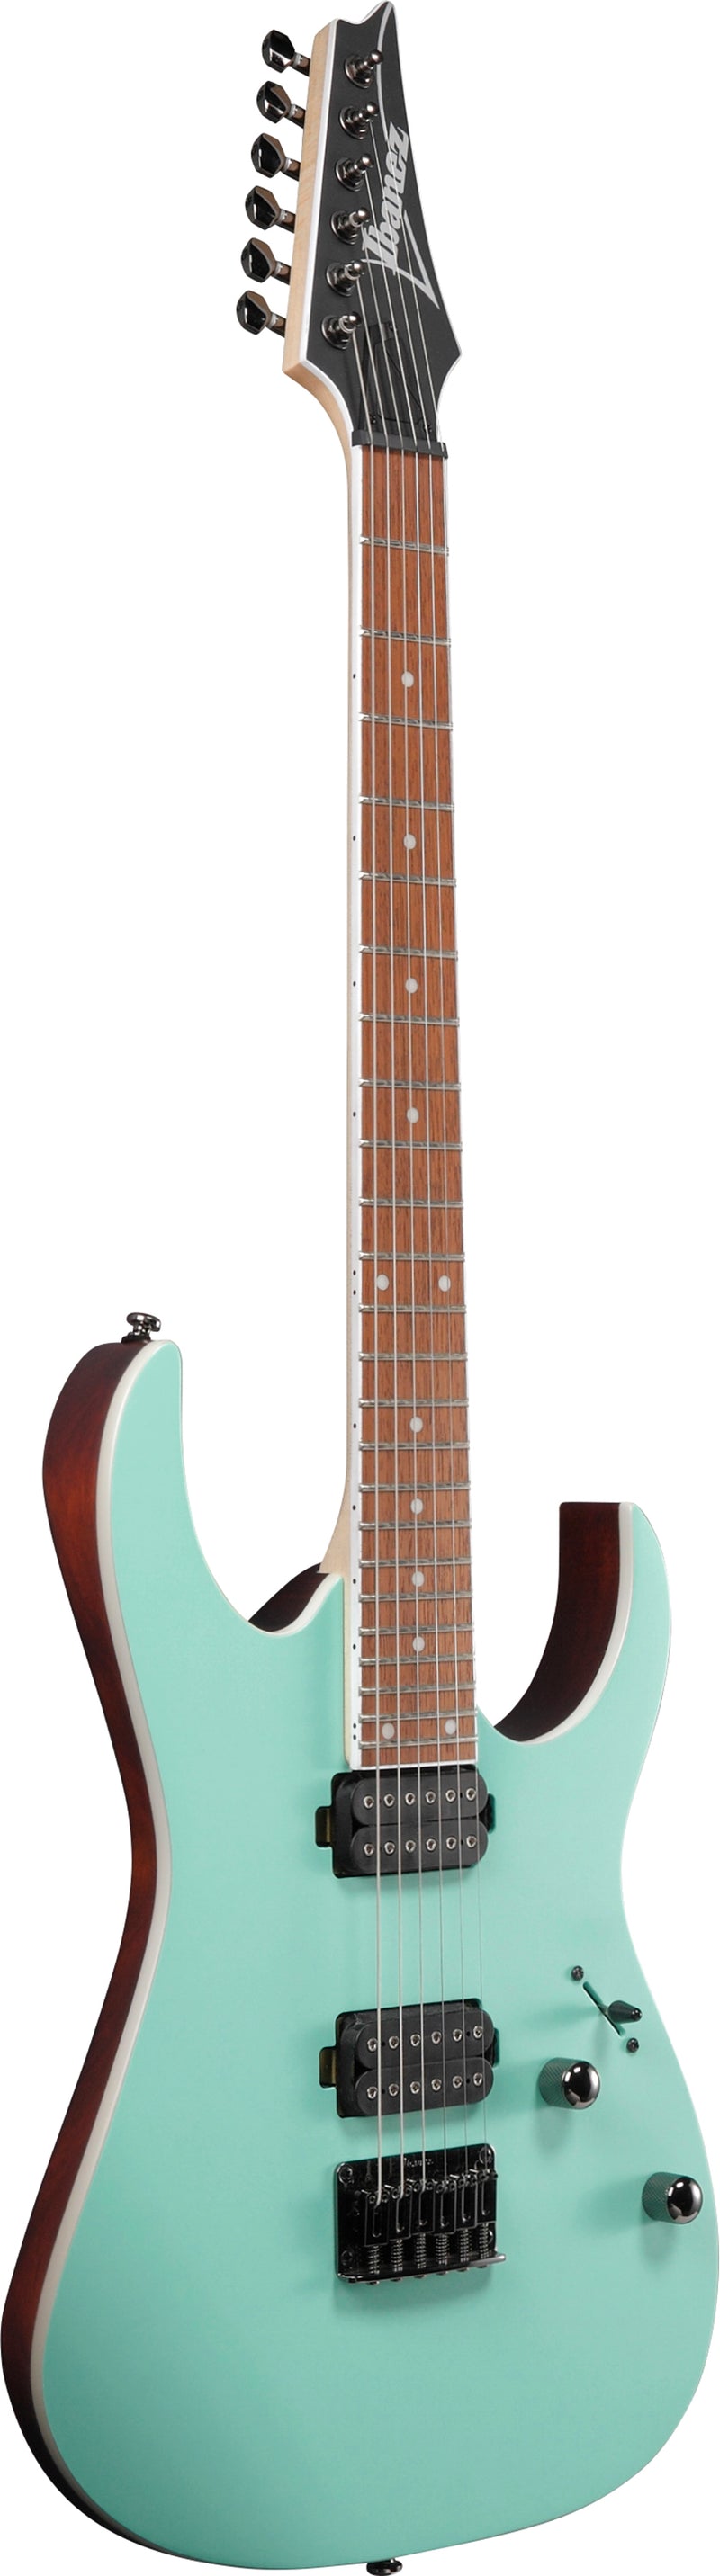 Ibanez RG Standard Electric Guitar (Sea Shore Matte)